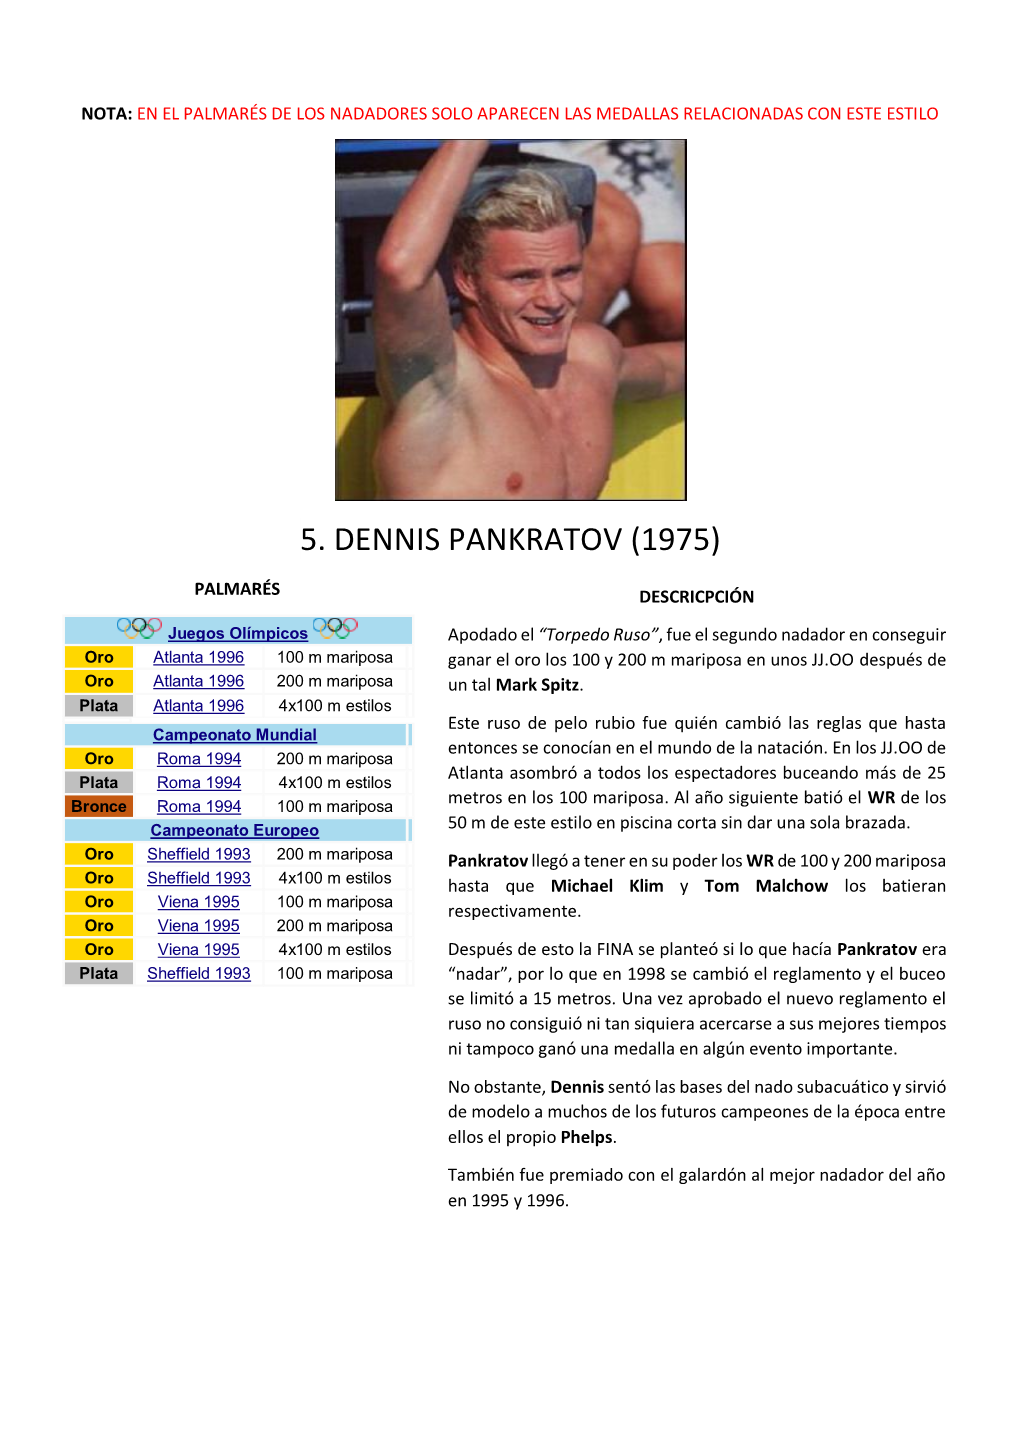 5. Dennis Pankratov (1975)